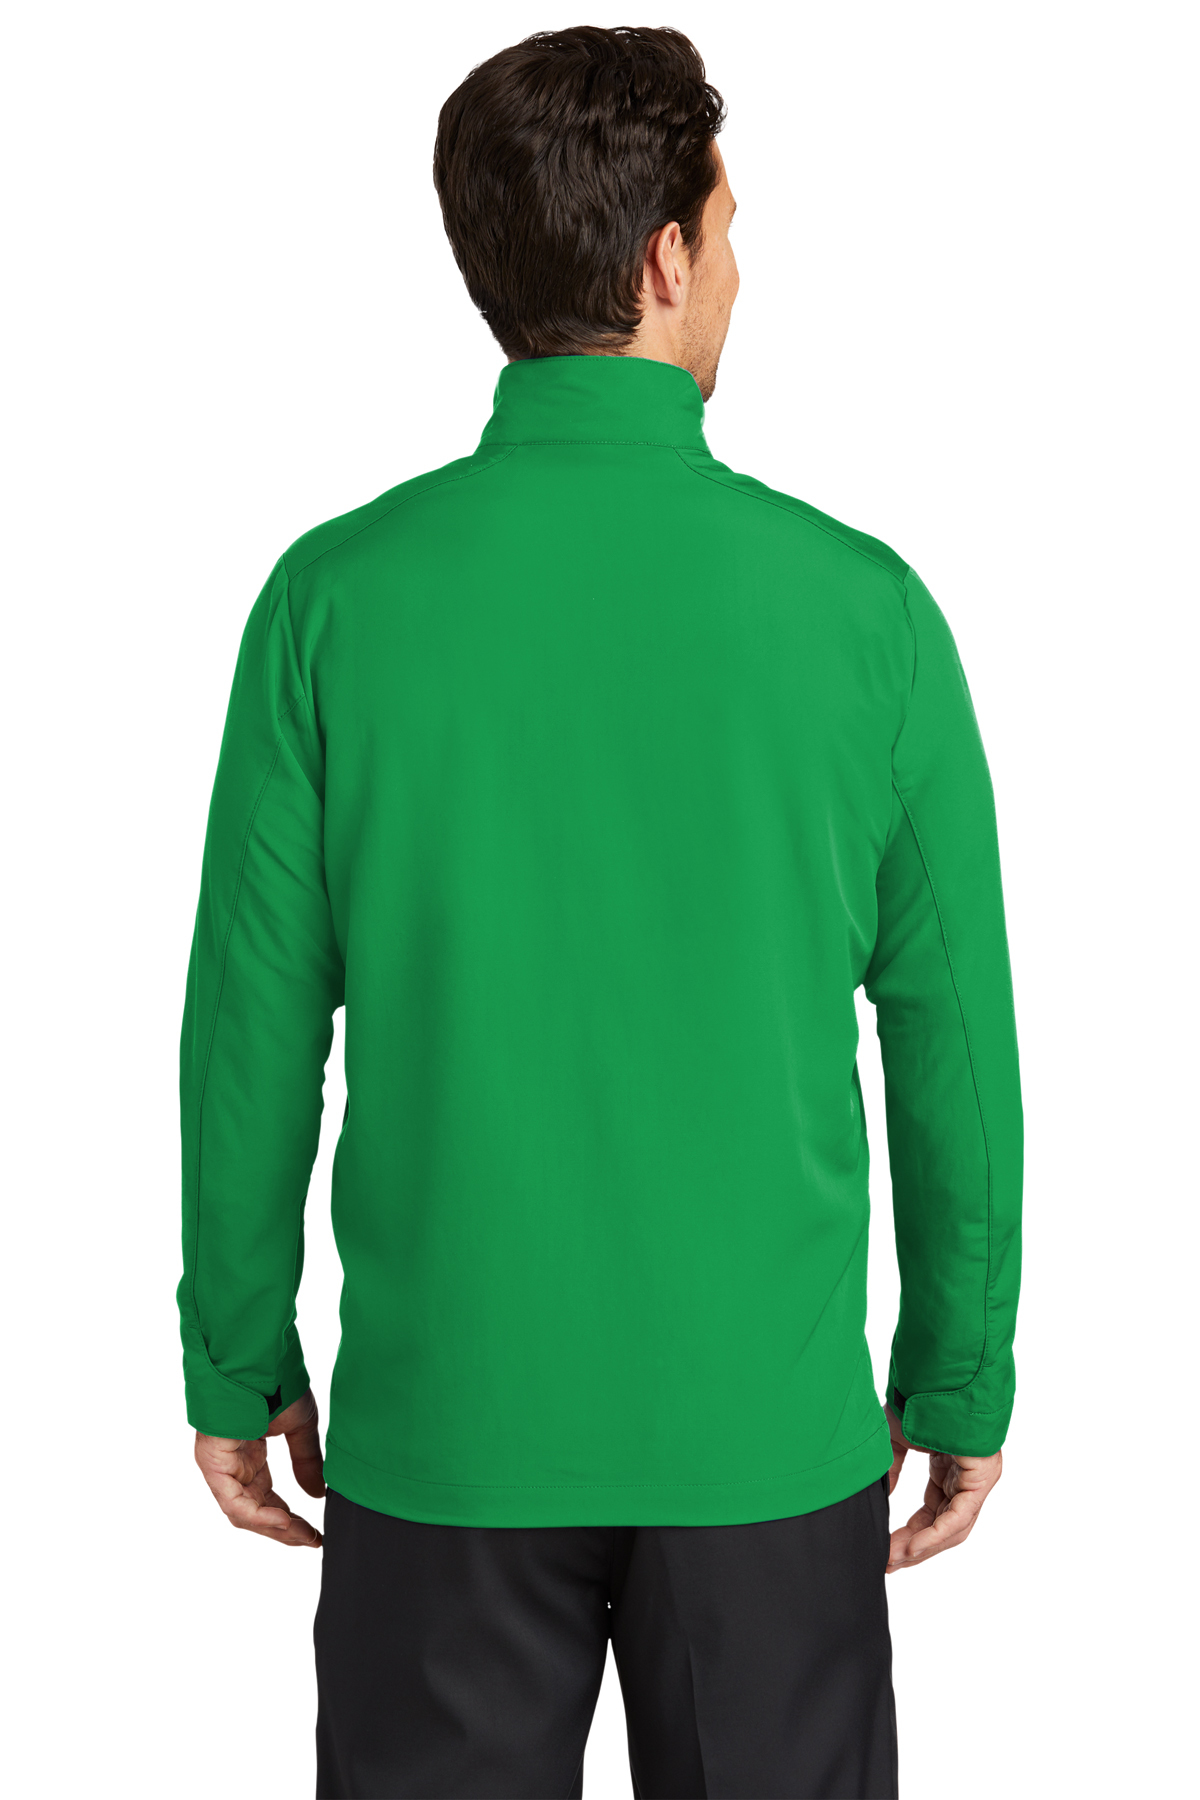 Nike 1/2-Zip Wind Shirt | Product | SanMar